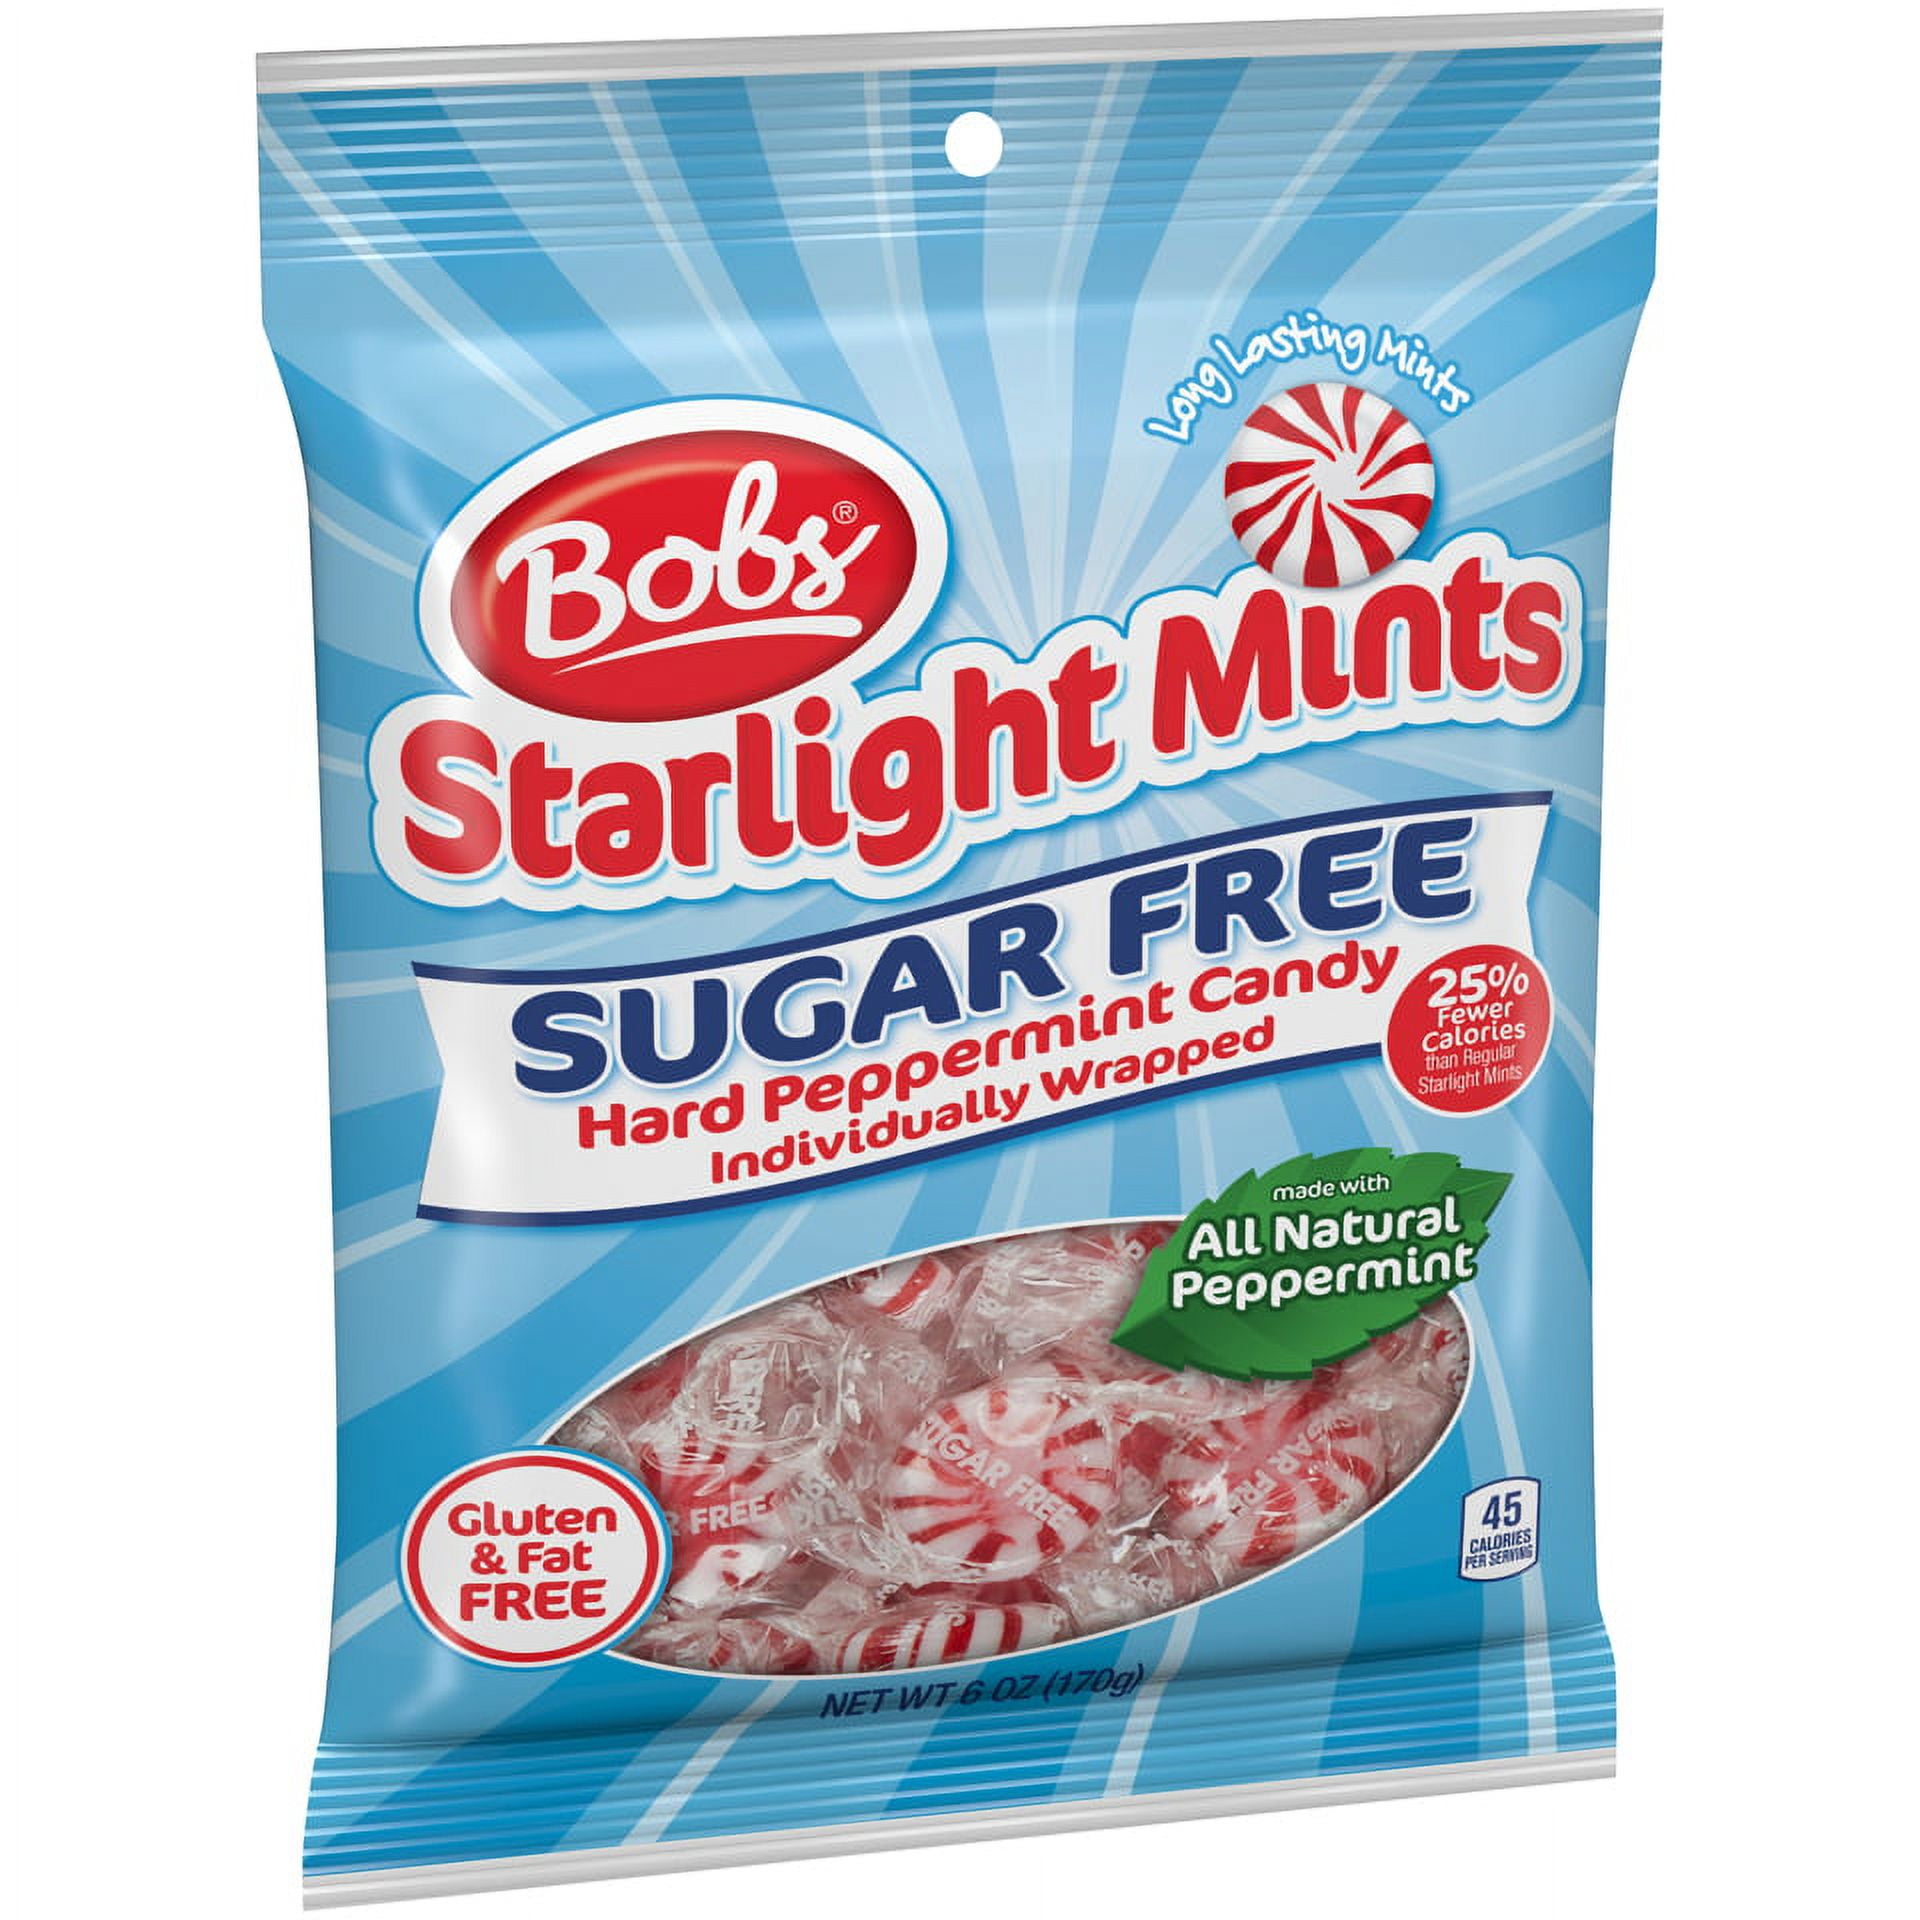 Brachs Sugar Free Star Brites Peppermint Hard Candy, 3.5 Oz (Pack